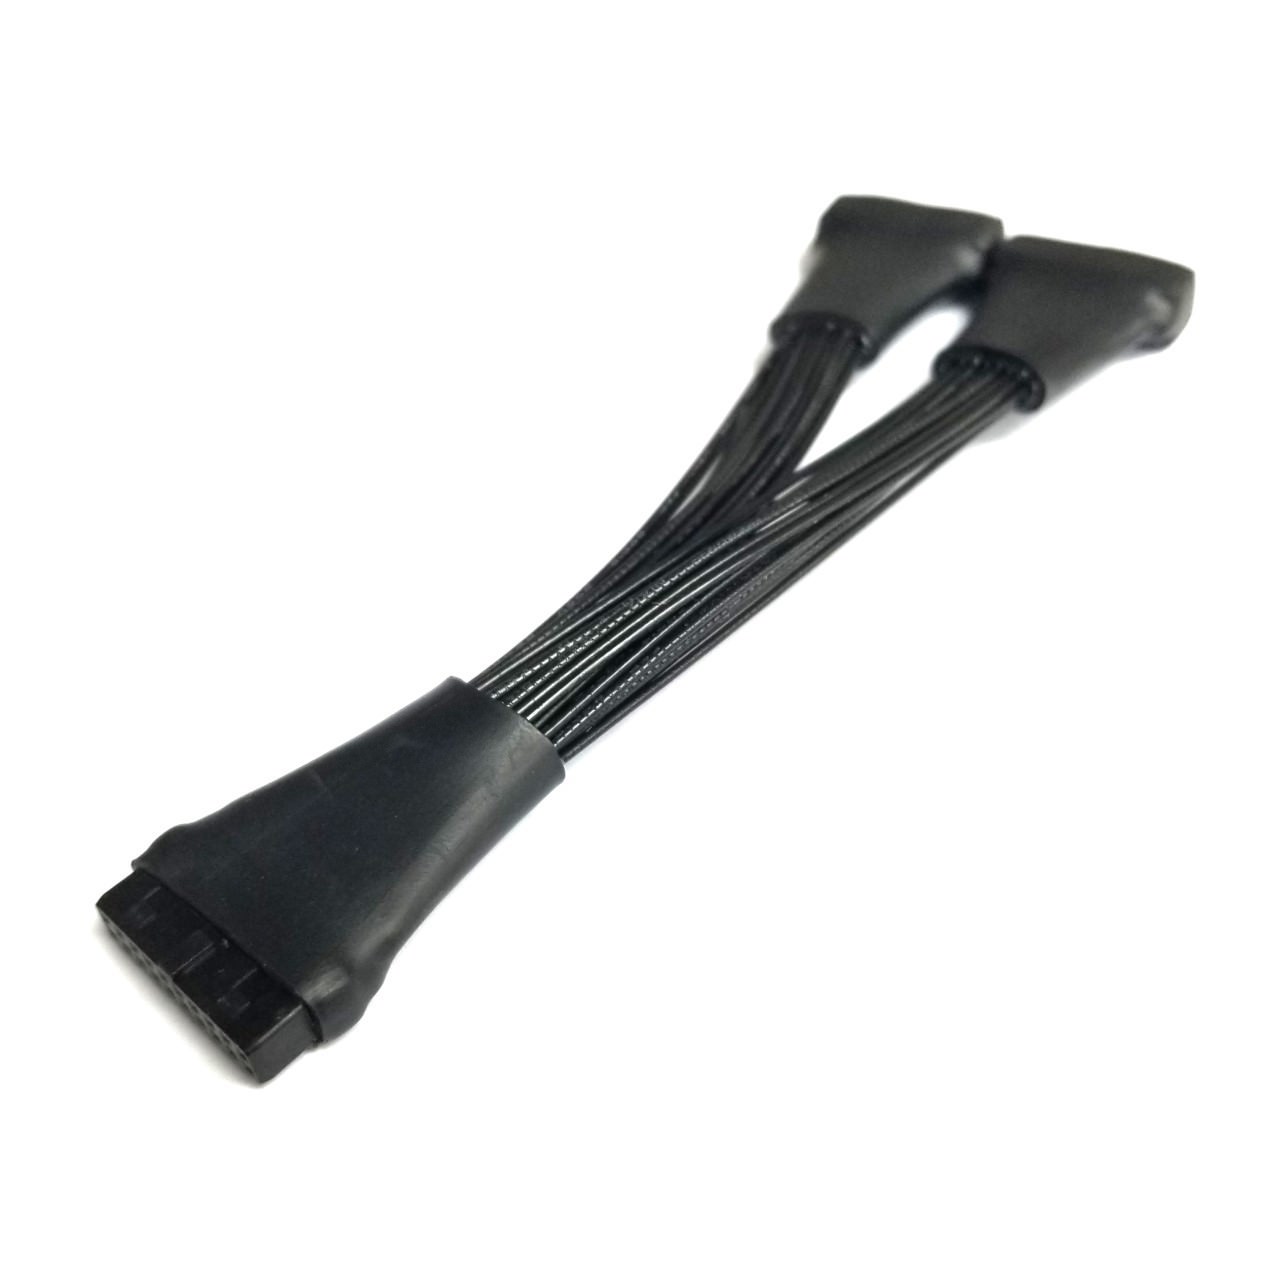 20 Pin USB 3.0 Internal Header Y Splitter Cable - modDIY.com